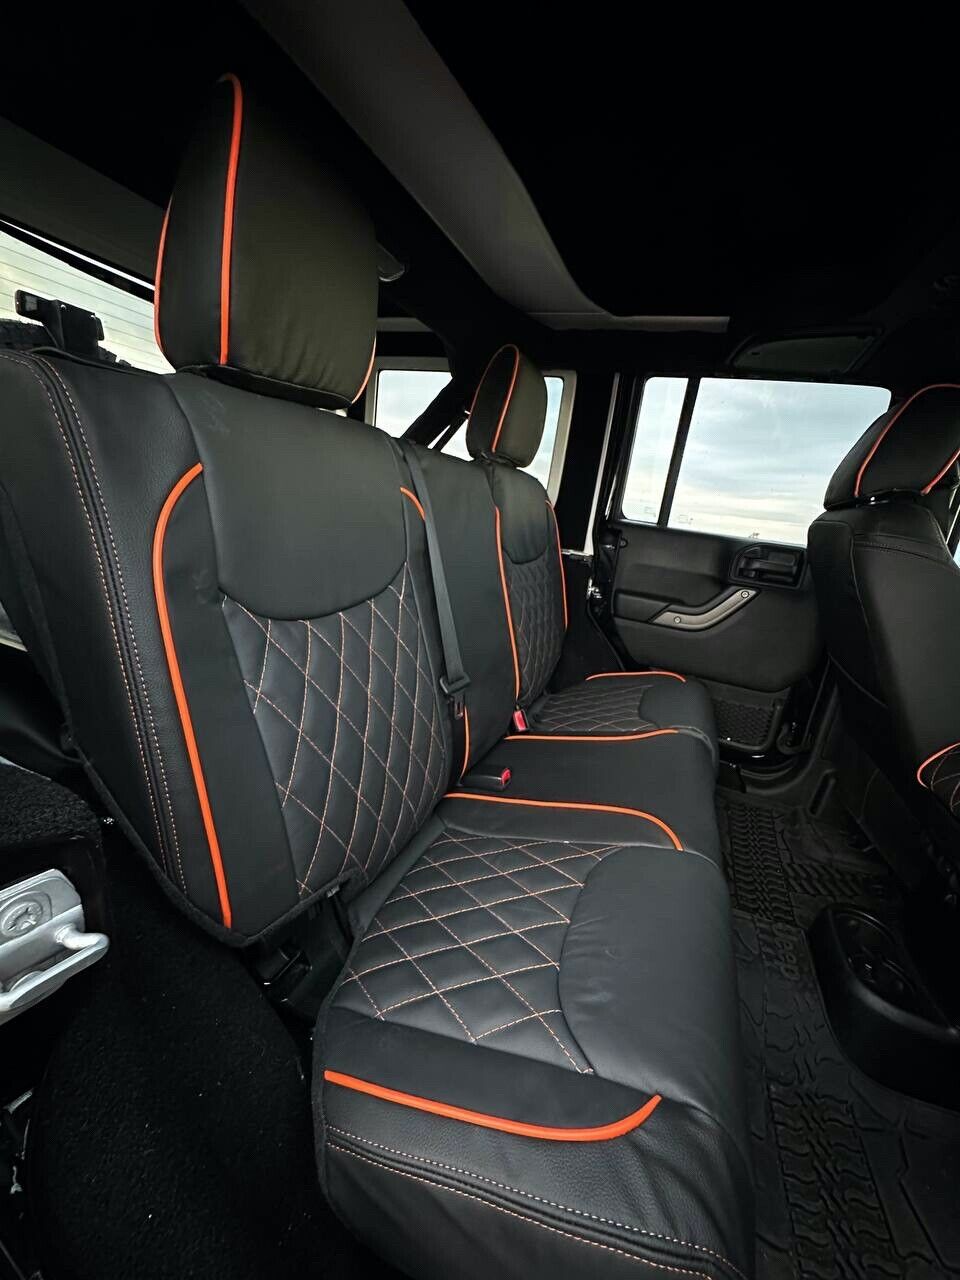 2015 2016 Fits JEEP WRANGLER JK CUSTOM LEATHER SEAT COVERS BLACK& Oran – US  leather car seats